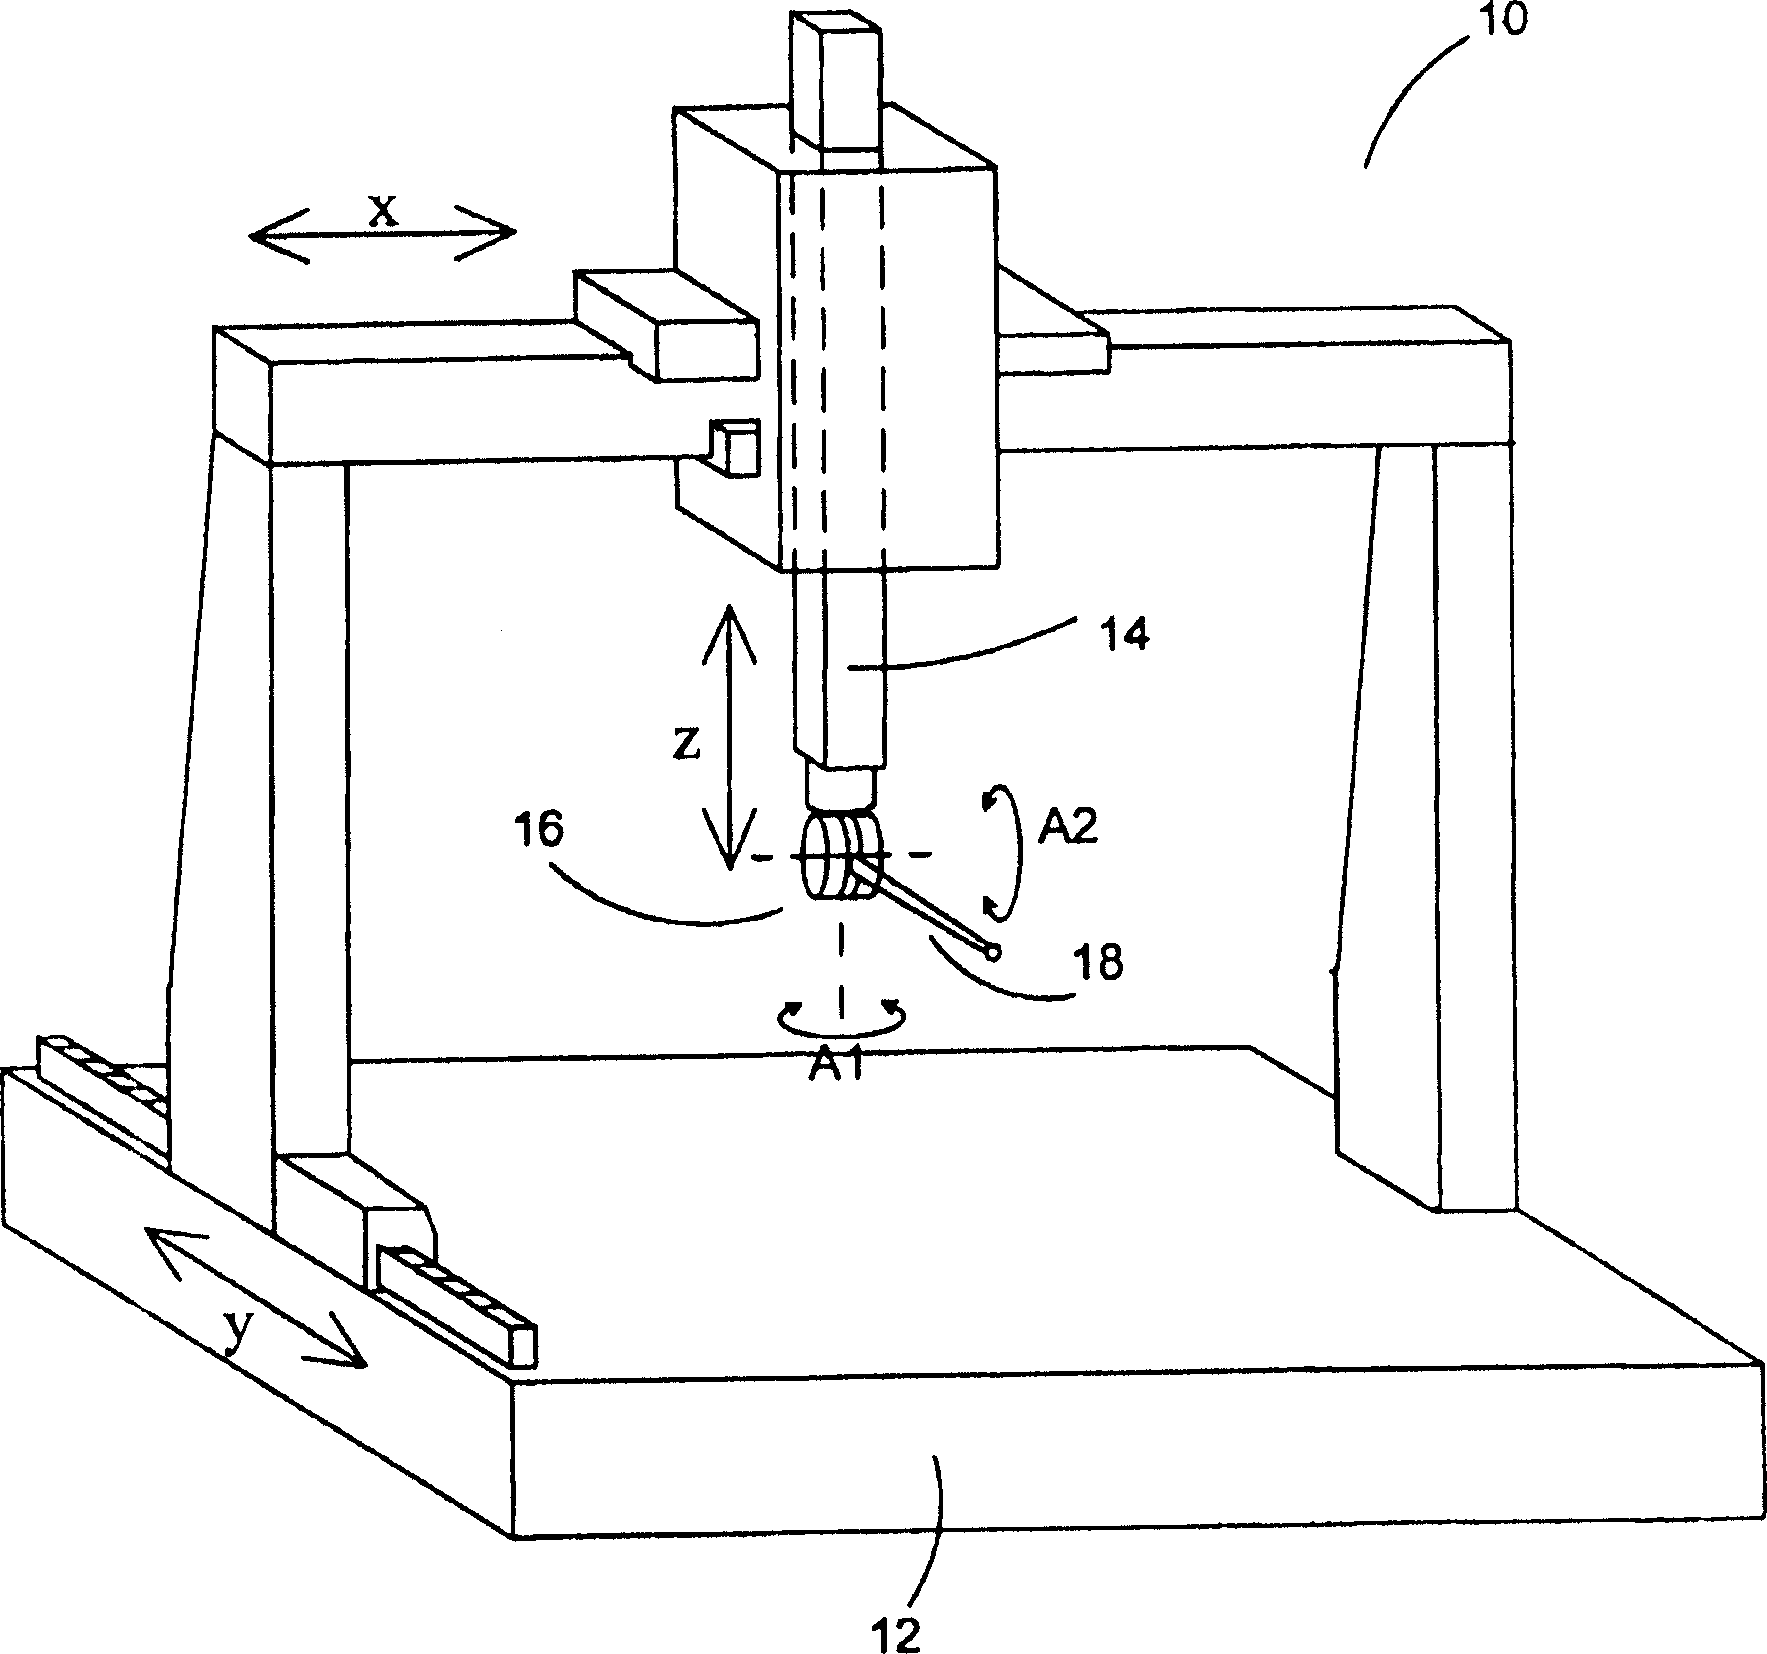 Method of error compensation in a coordinate measuring machine